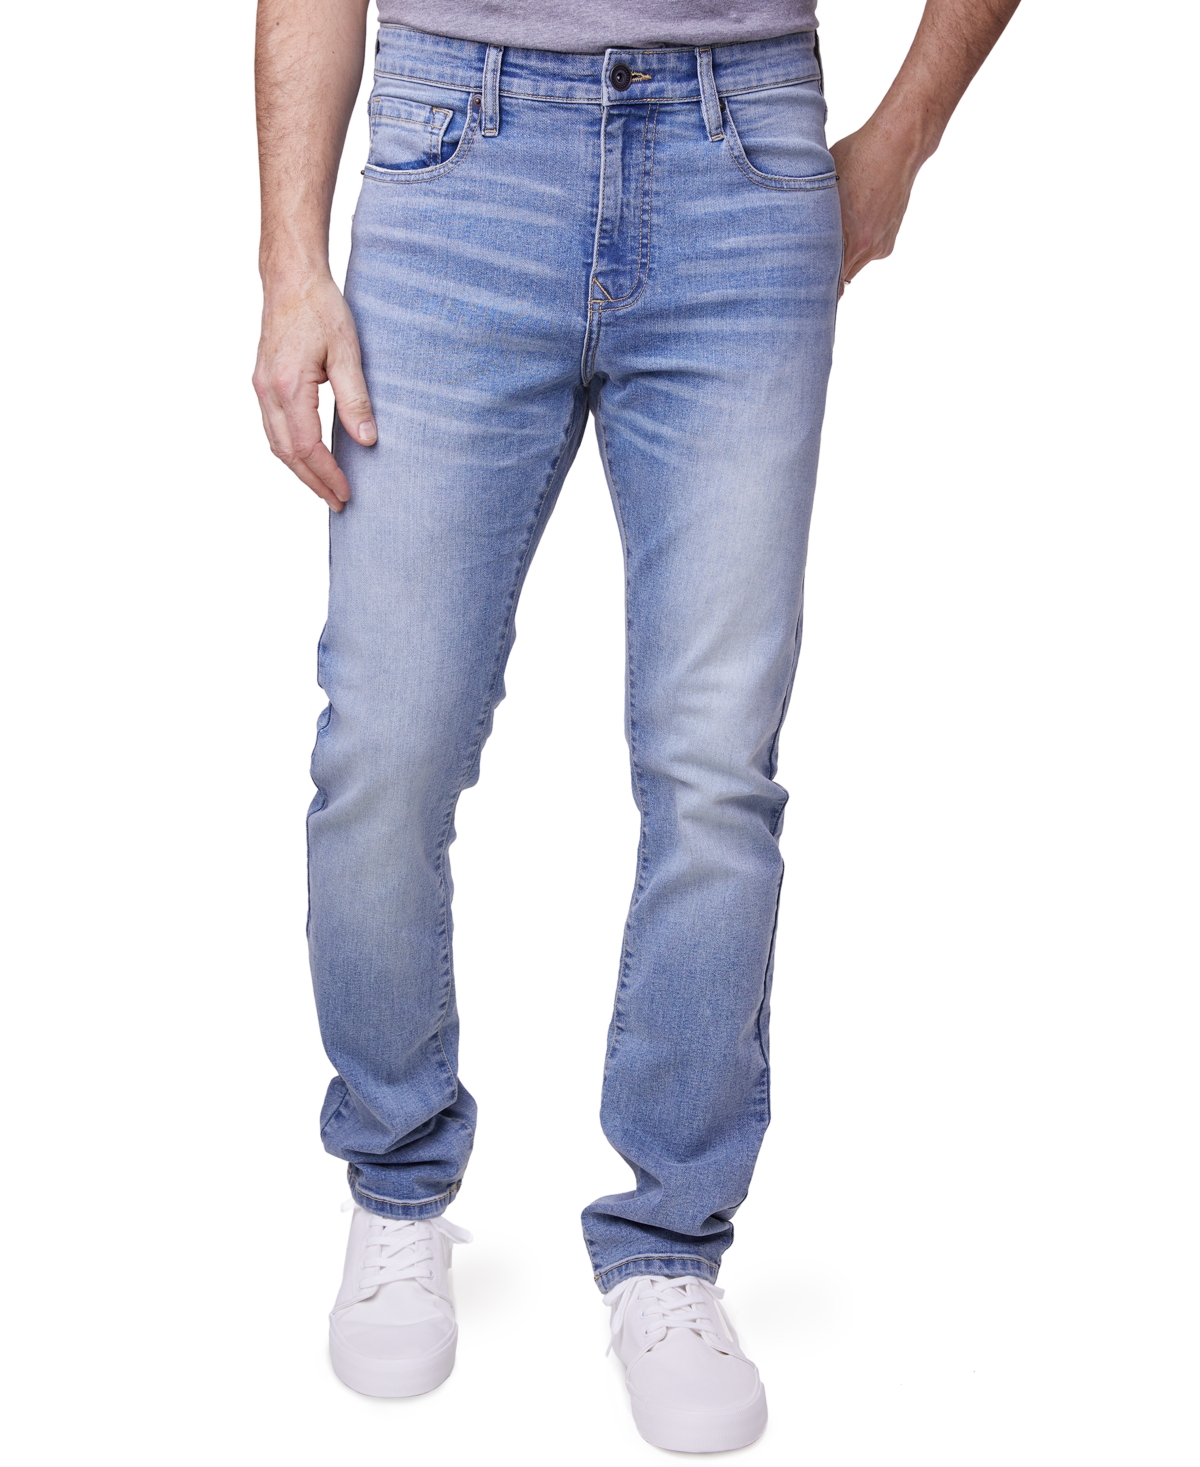 Men's Slim-Fit Stretch Jeans - Tim